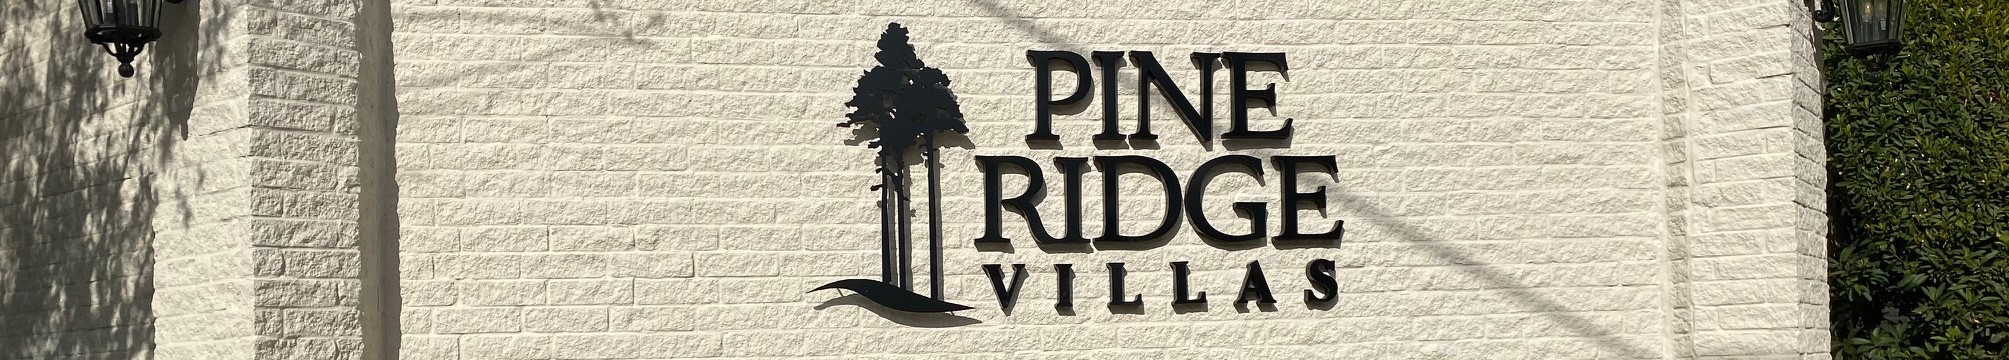 Pine Ridge Villas cover